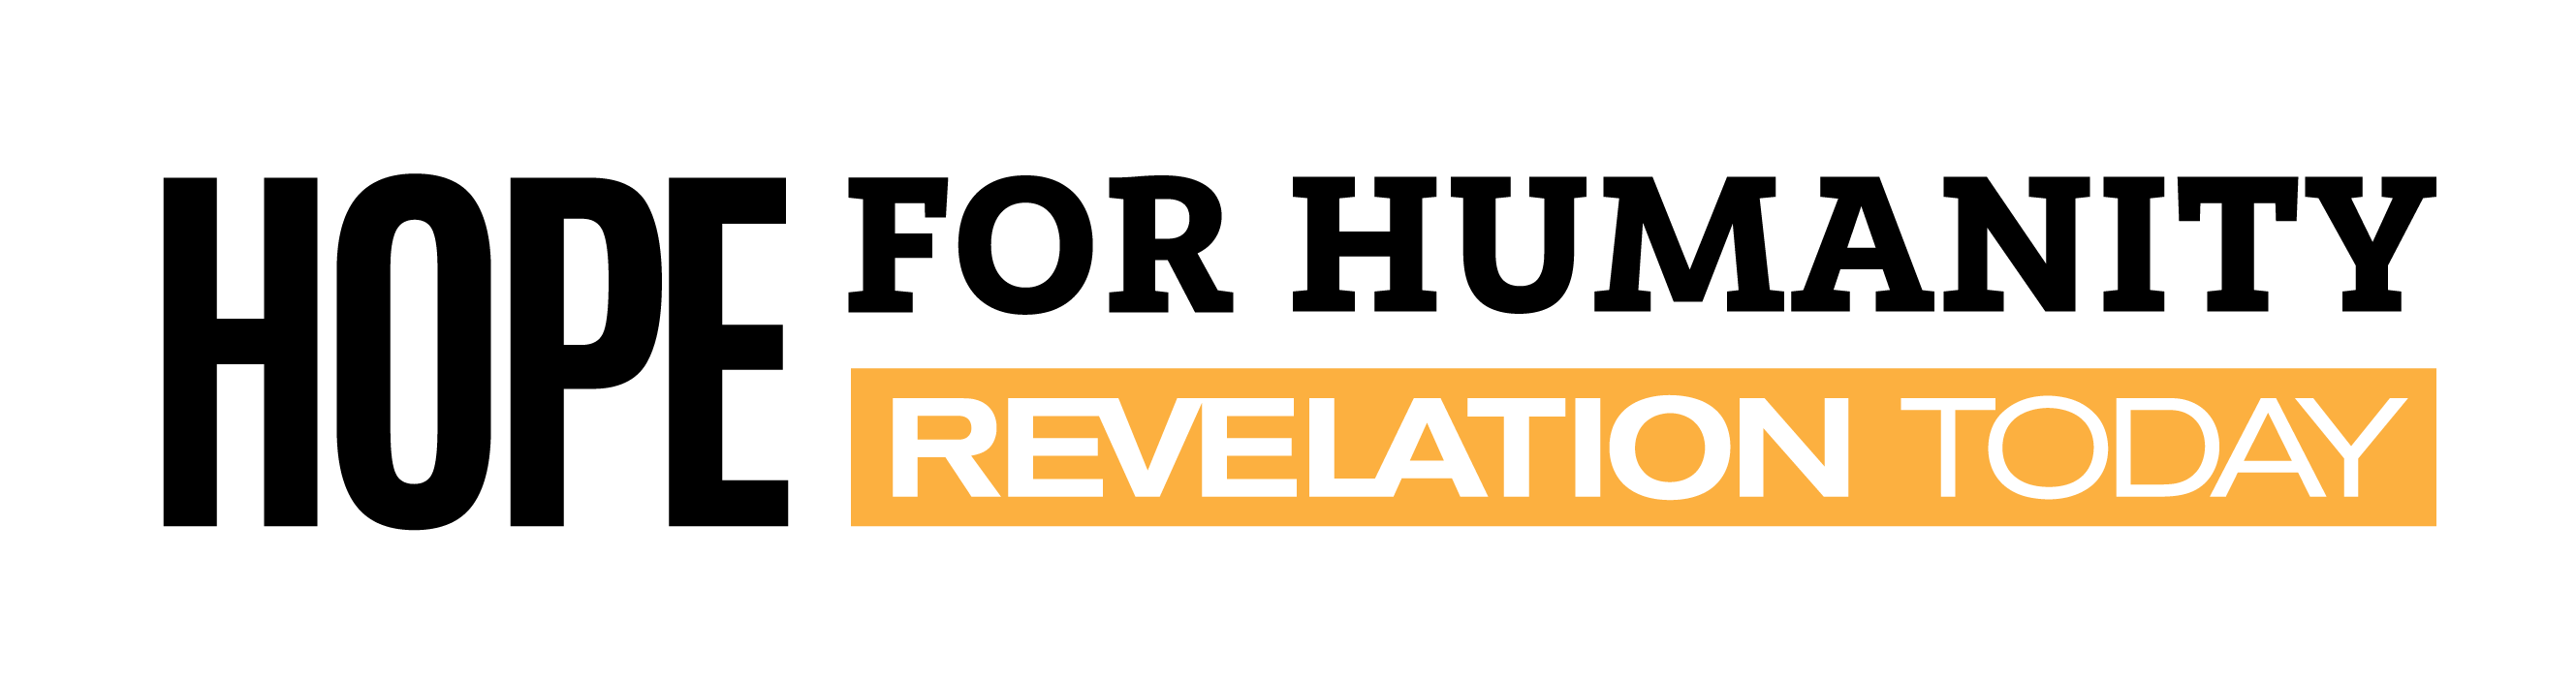 Revelation Today: Hope for Humanity Logo